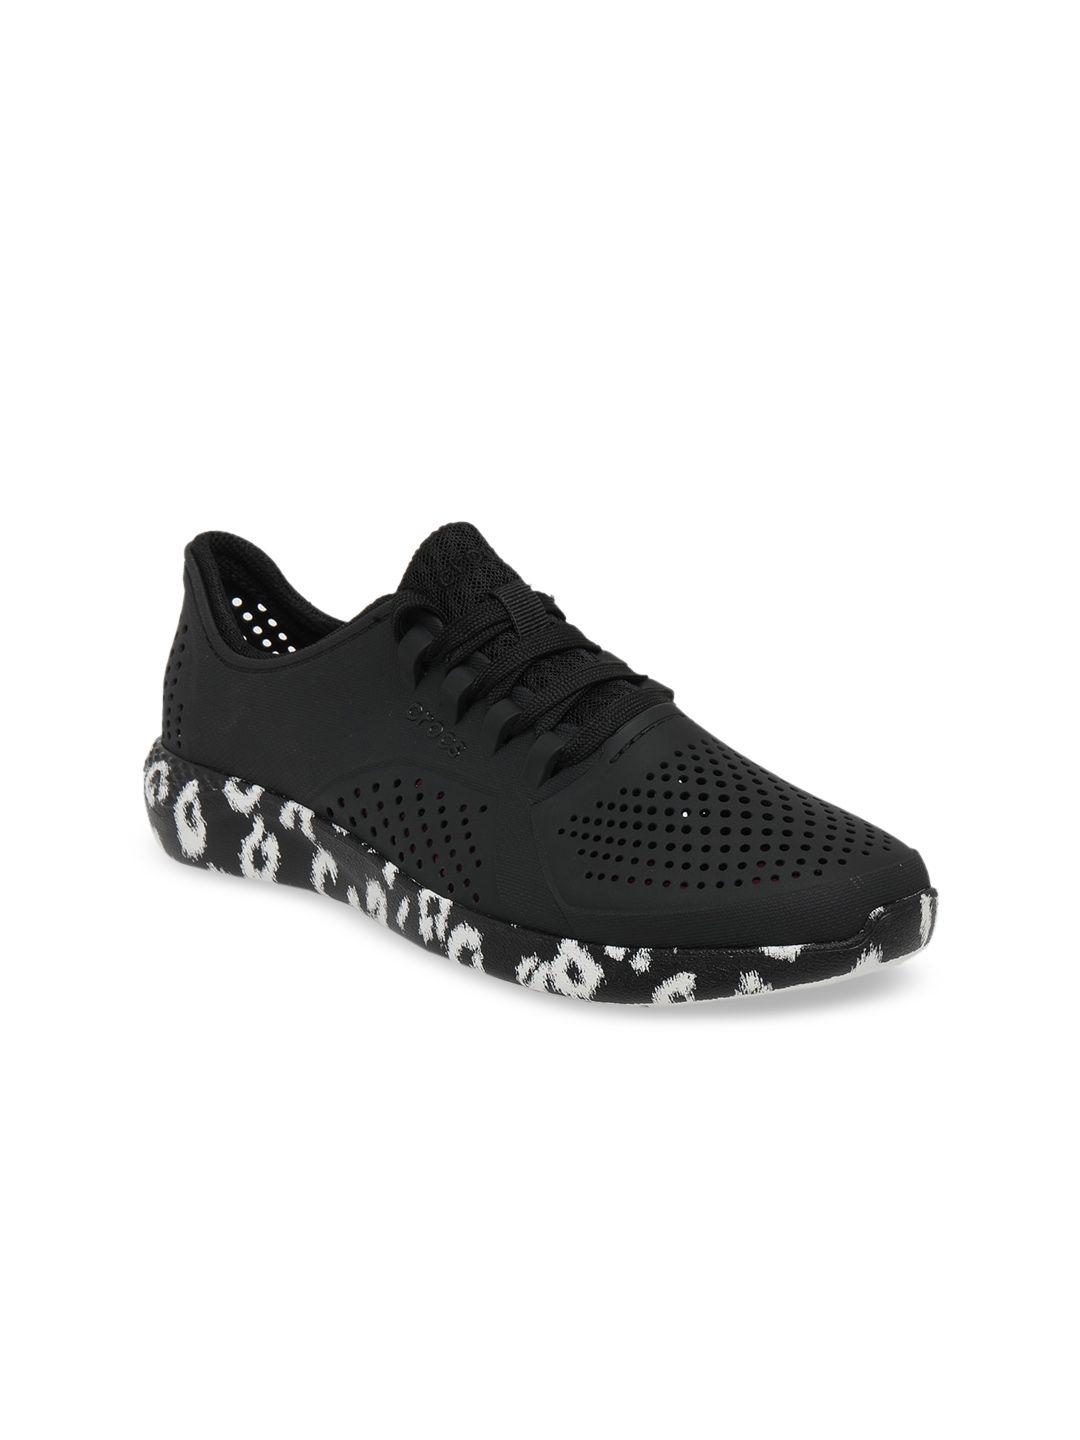 crocs literide  women black sneakers